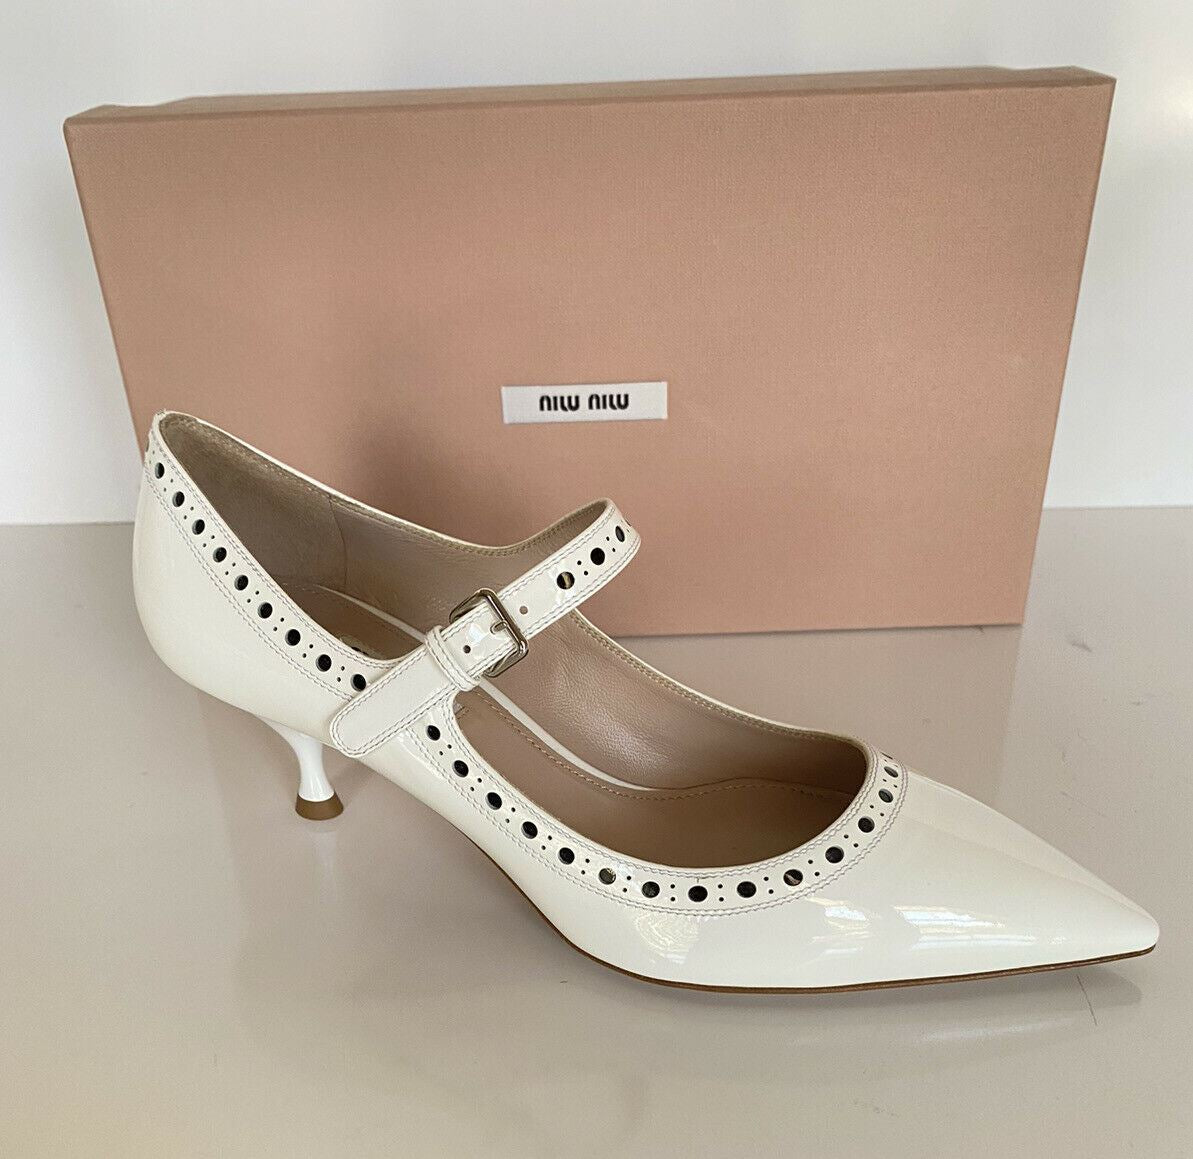 NIB MIU MIU PRADA Women's Patent Leather White Kitten Heel Pumps 8 US 5I868C